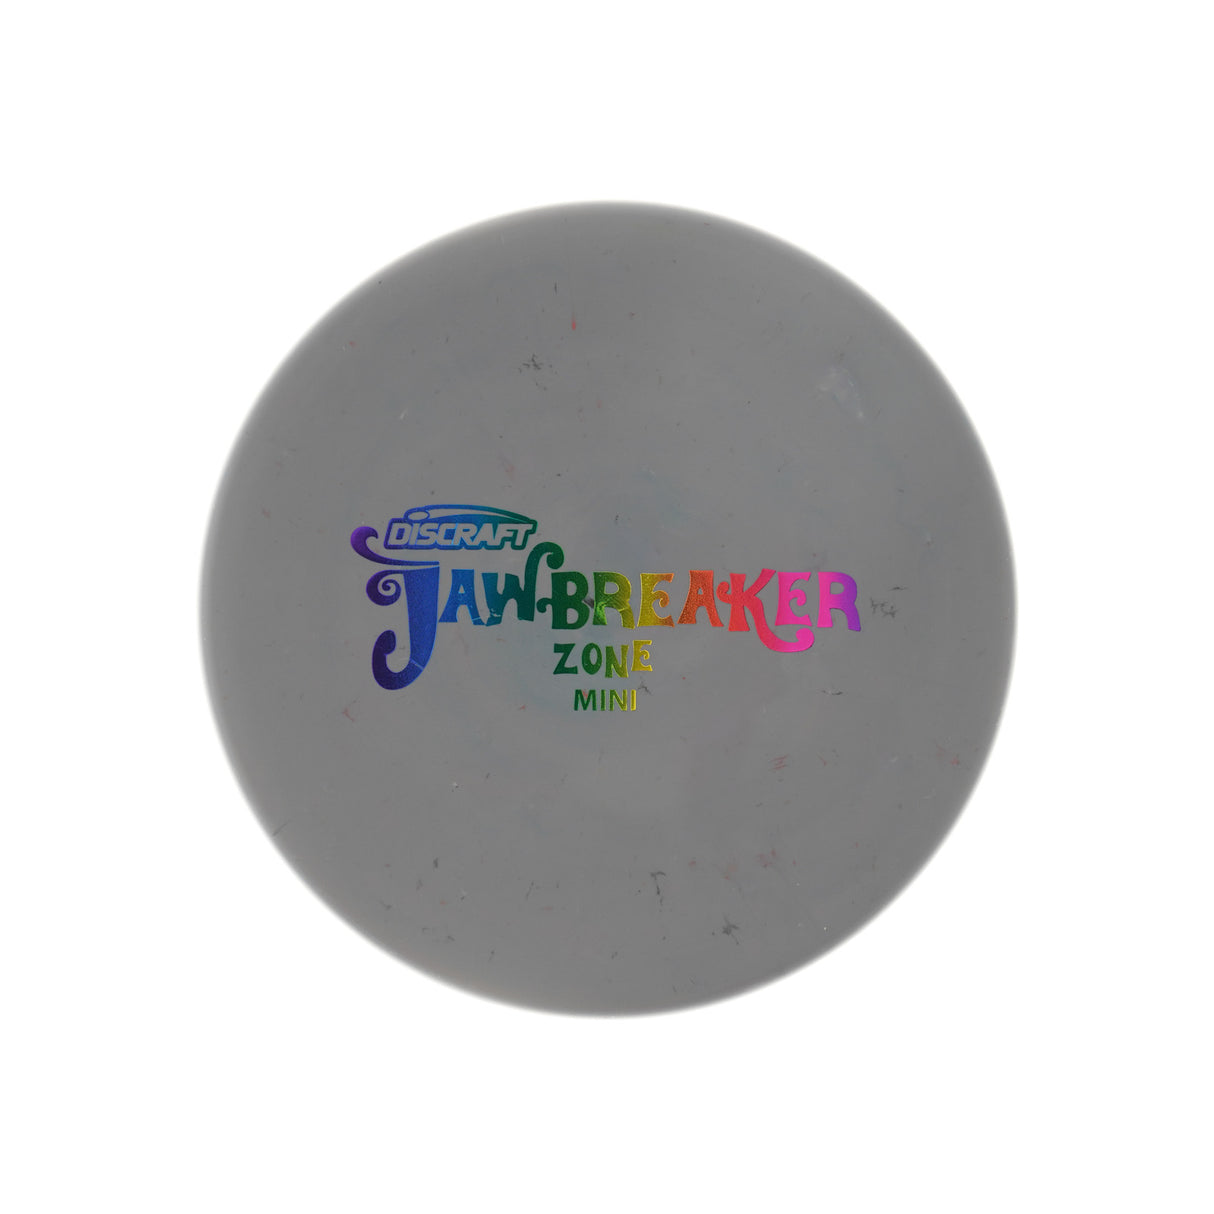 Discraft Mini Zone - Jawbreaker 73g | Style 0001